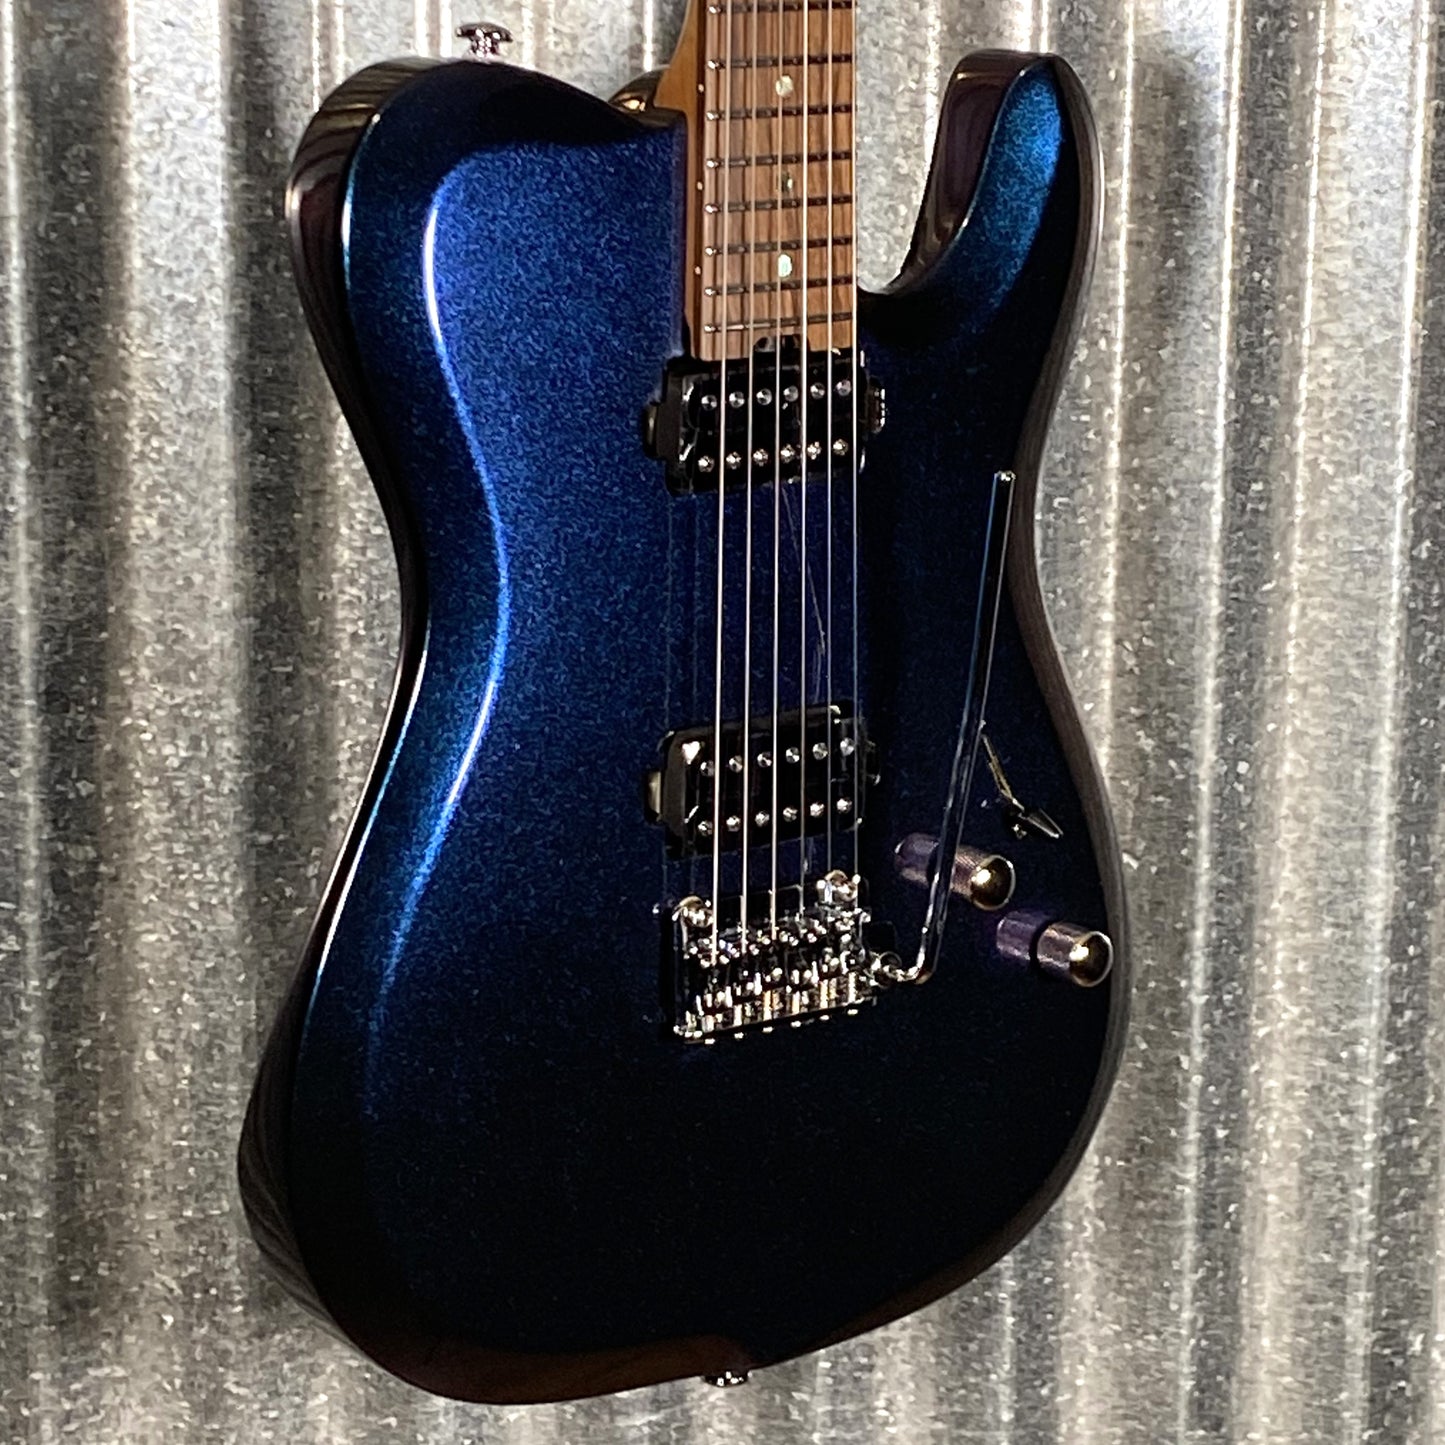 Musi Virgo Fusion Telecaster Deluxe Tremolo Indigo Blue Guitar #5148 Used